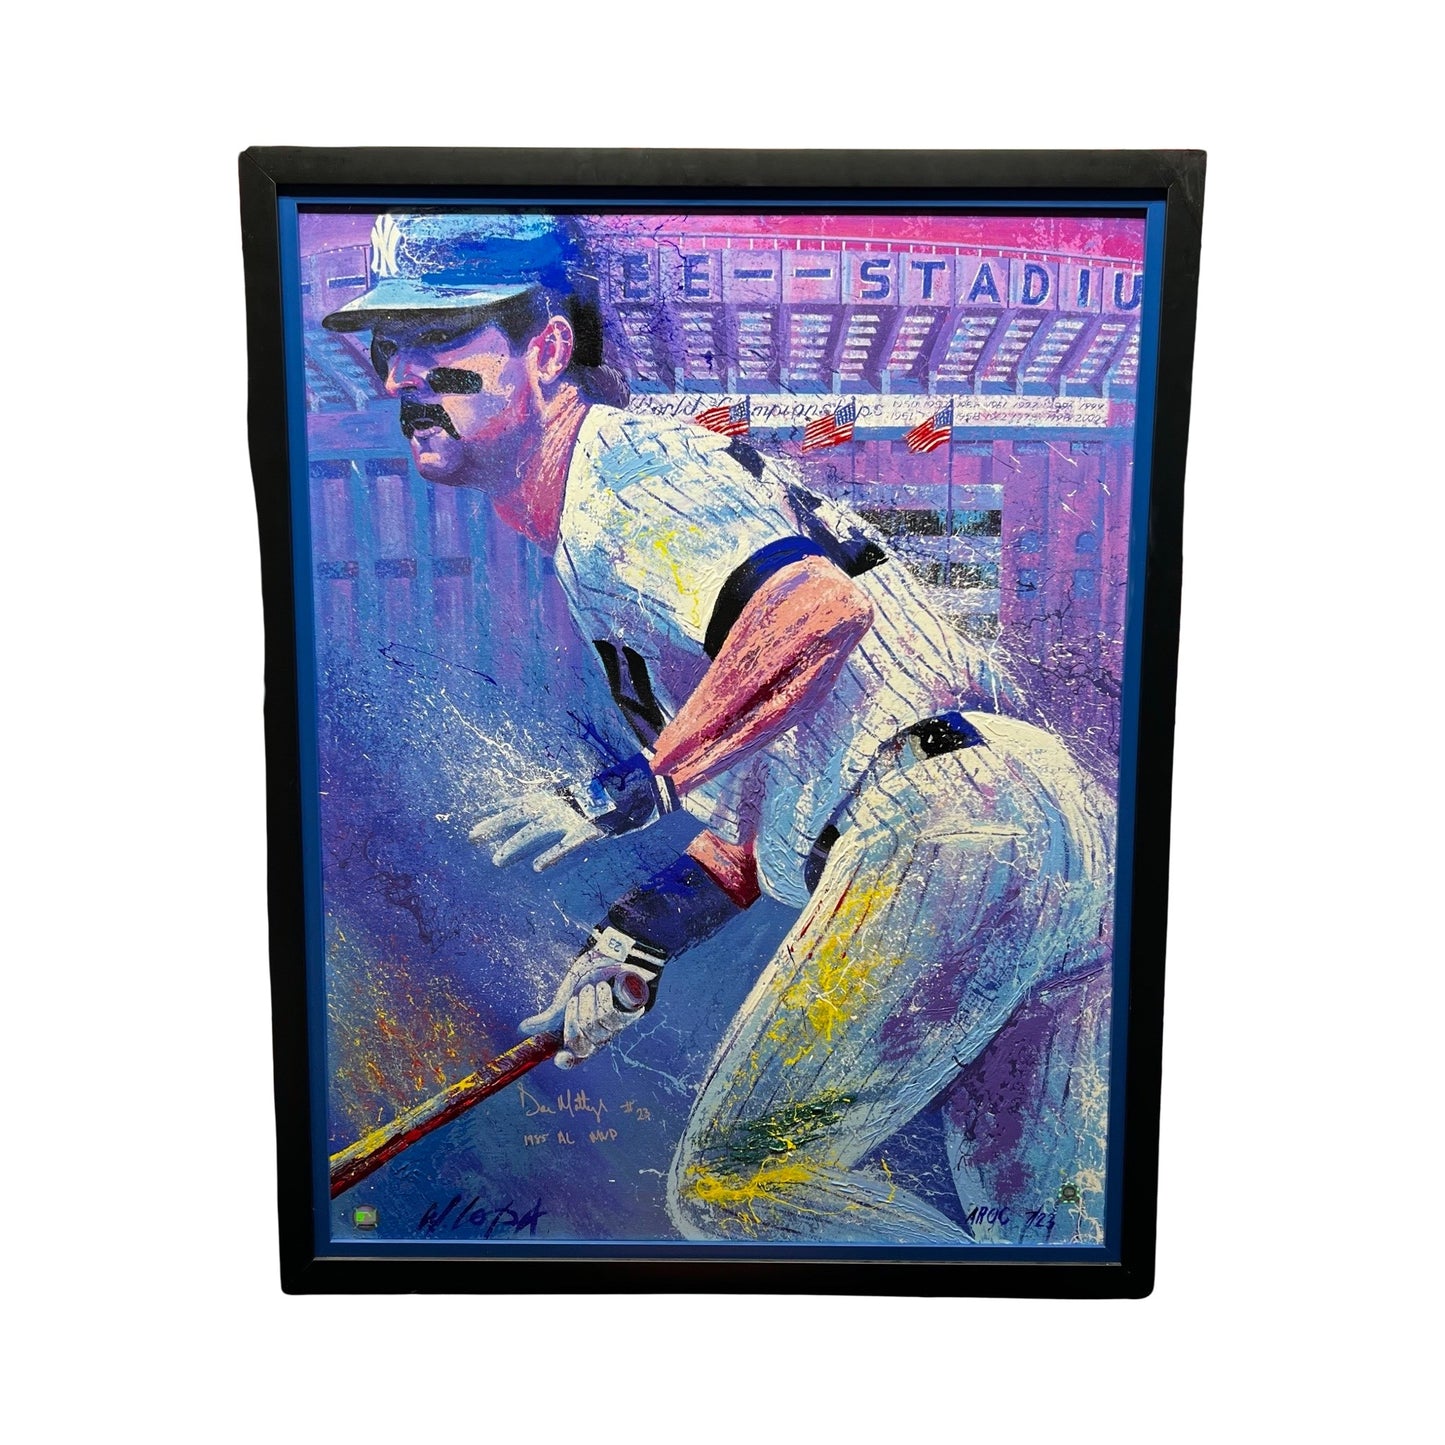 Don Mattingly Autographed New York Yankees Framed 30x42 William Lopa Art Canvas “1985 AL MVP” Inscription LE 7/23 MLB